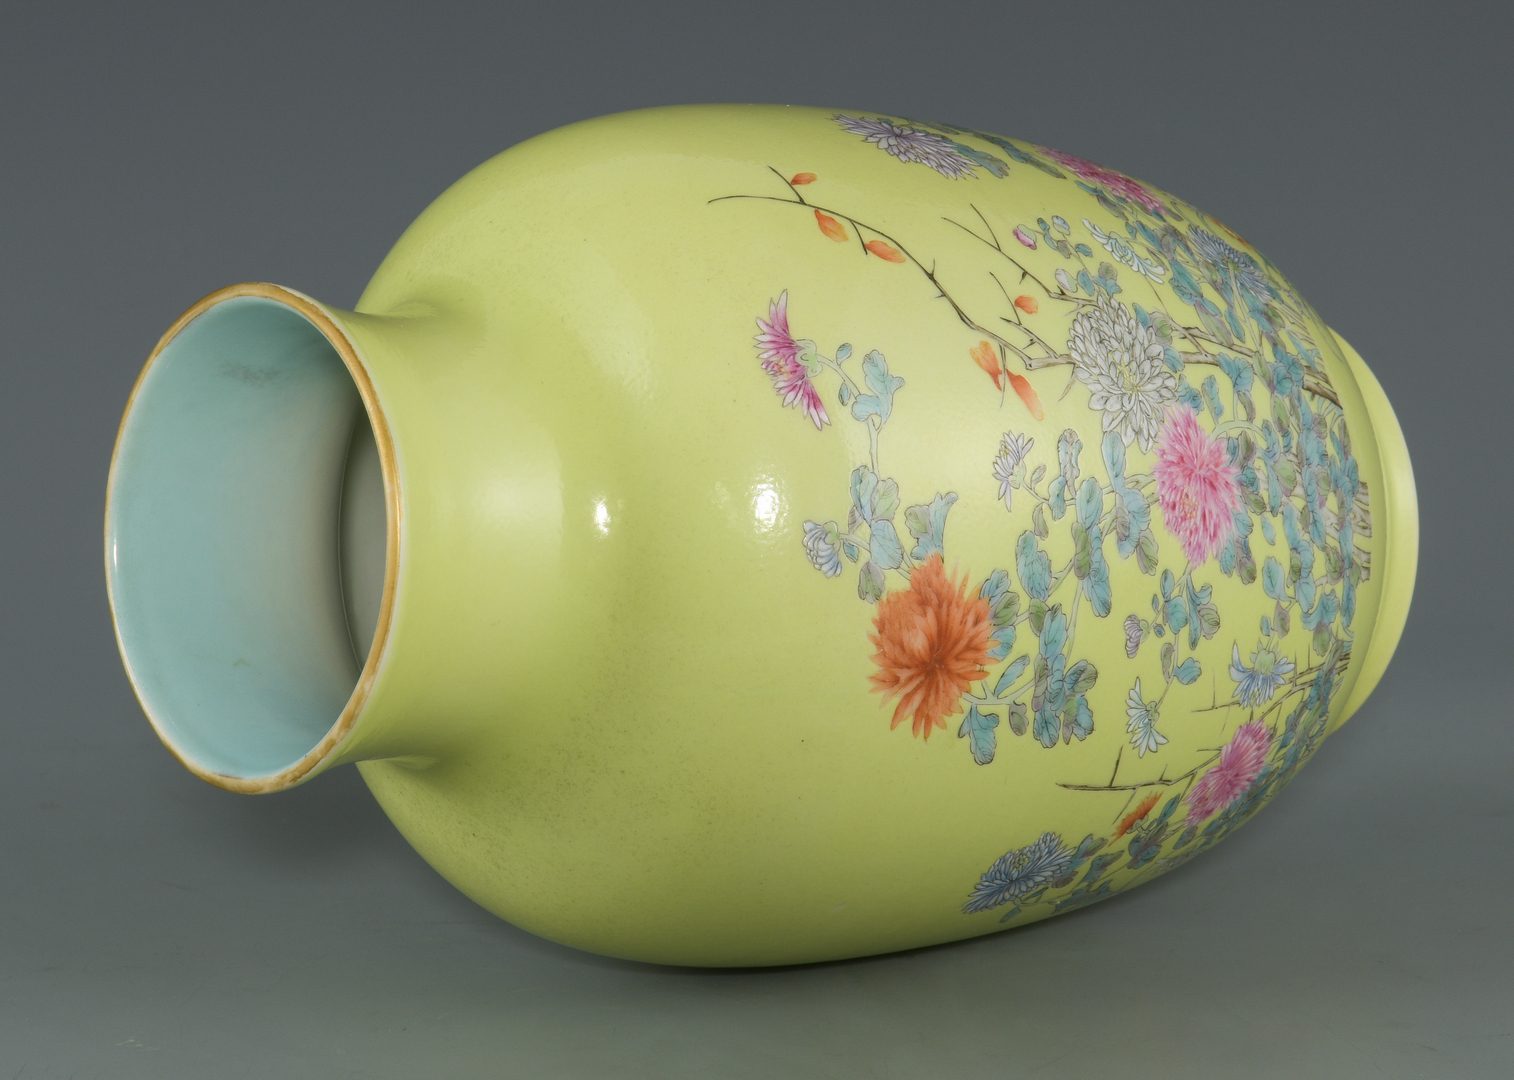 Lot 25: Chinese Porcelain Vase, Chrysanthemum Decoration